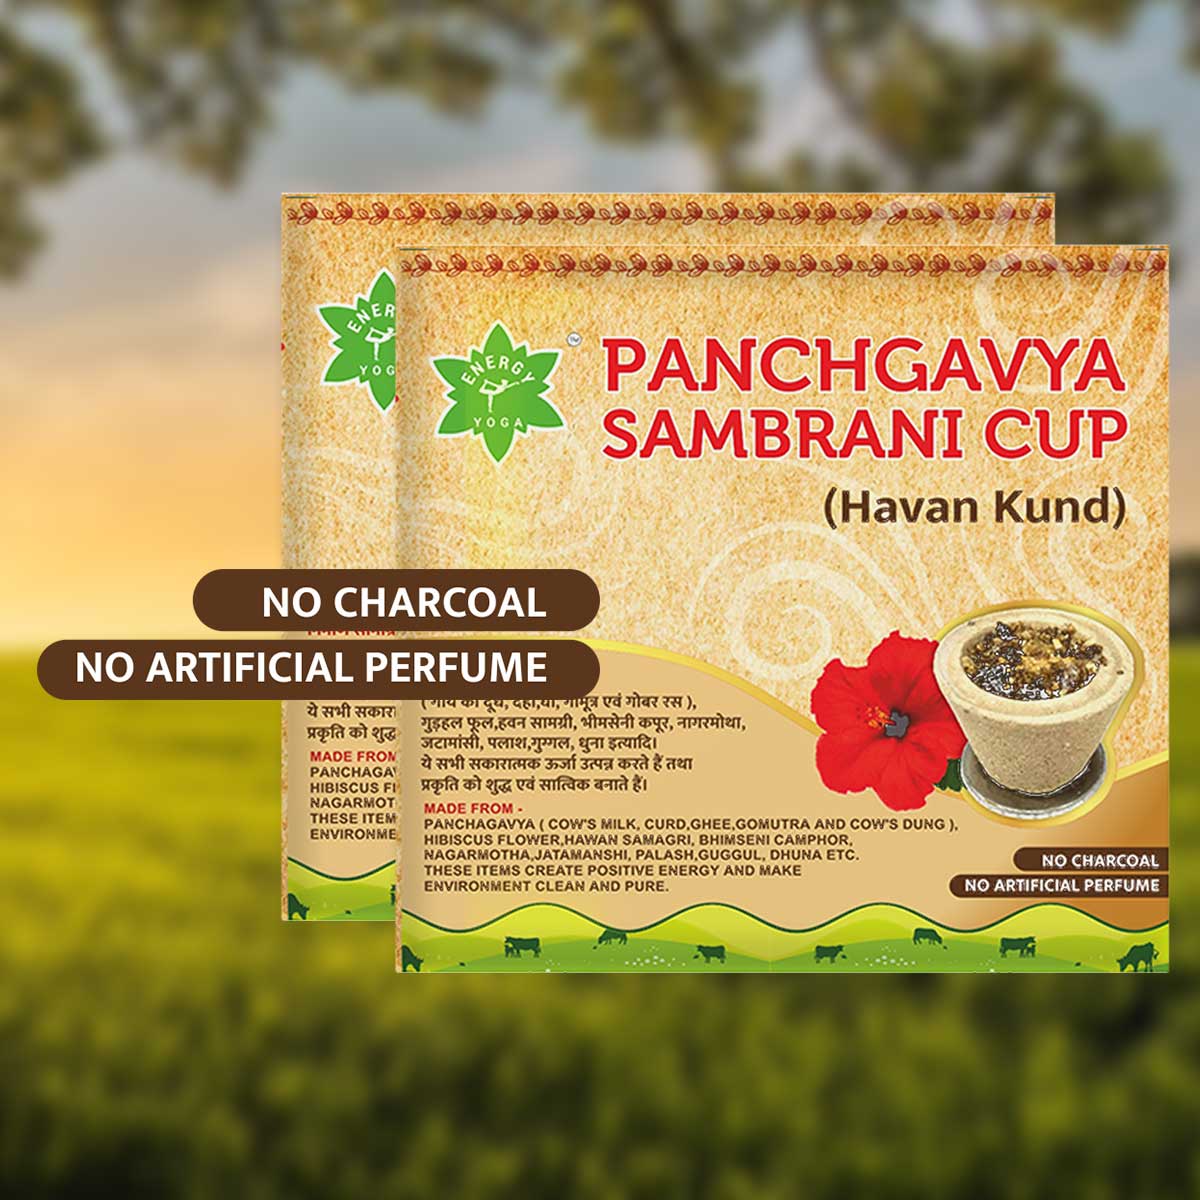 Panchgavya  Sambarani Cup (Havan Kund) - 2 Packs with 16 Cups in each